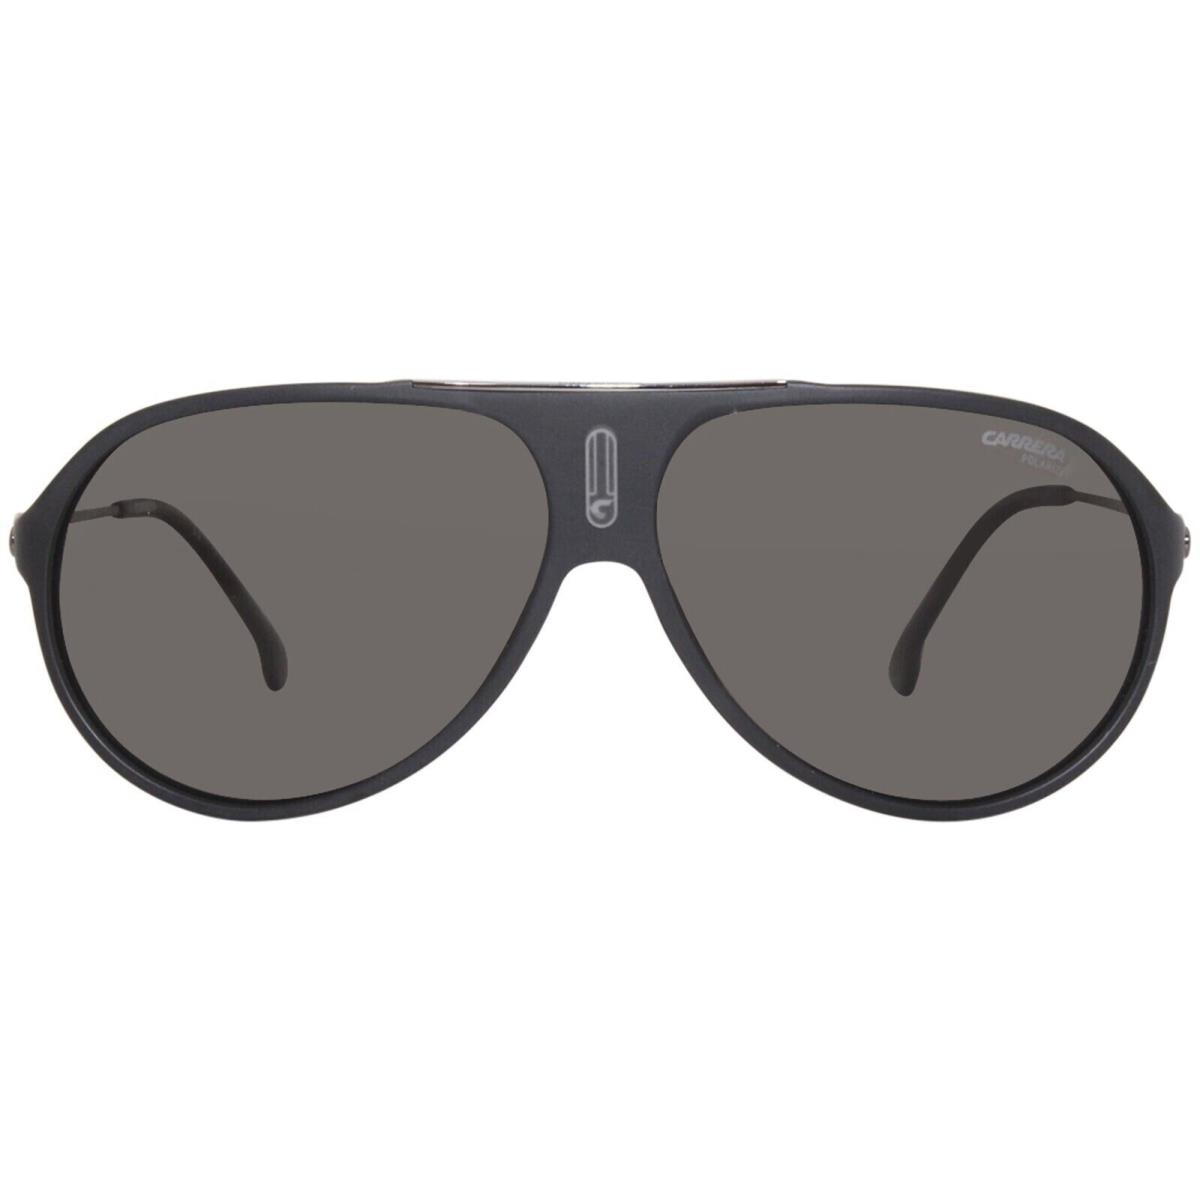 Carrera Hot 65 Mt Black Grey Polarized 63mm Pilot Sunglasses Special Edition